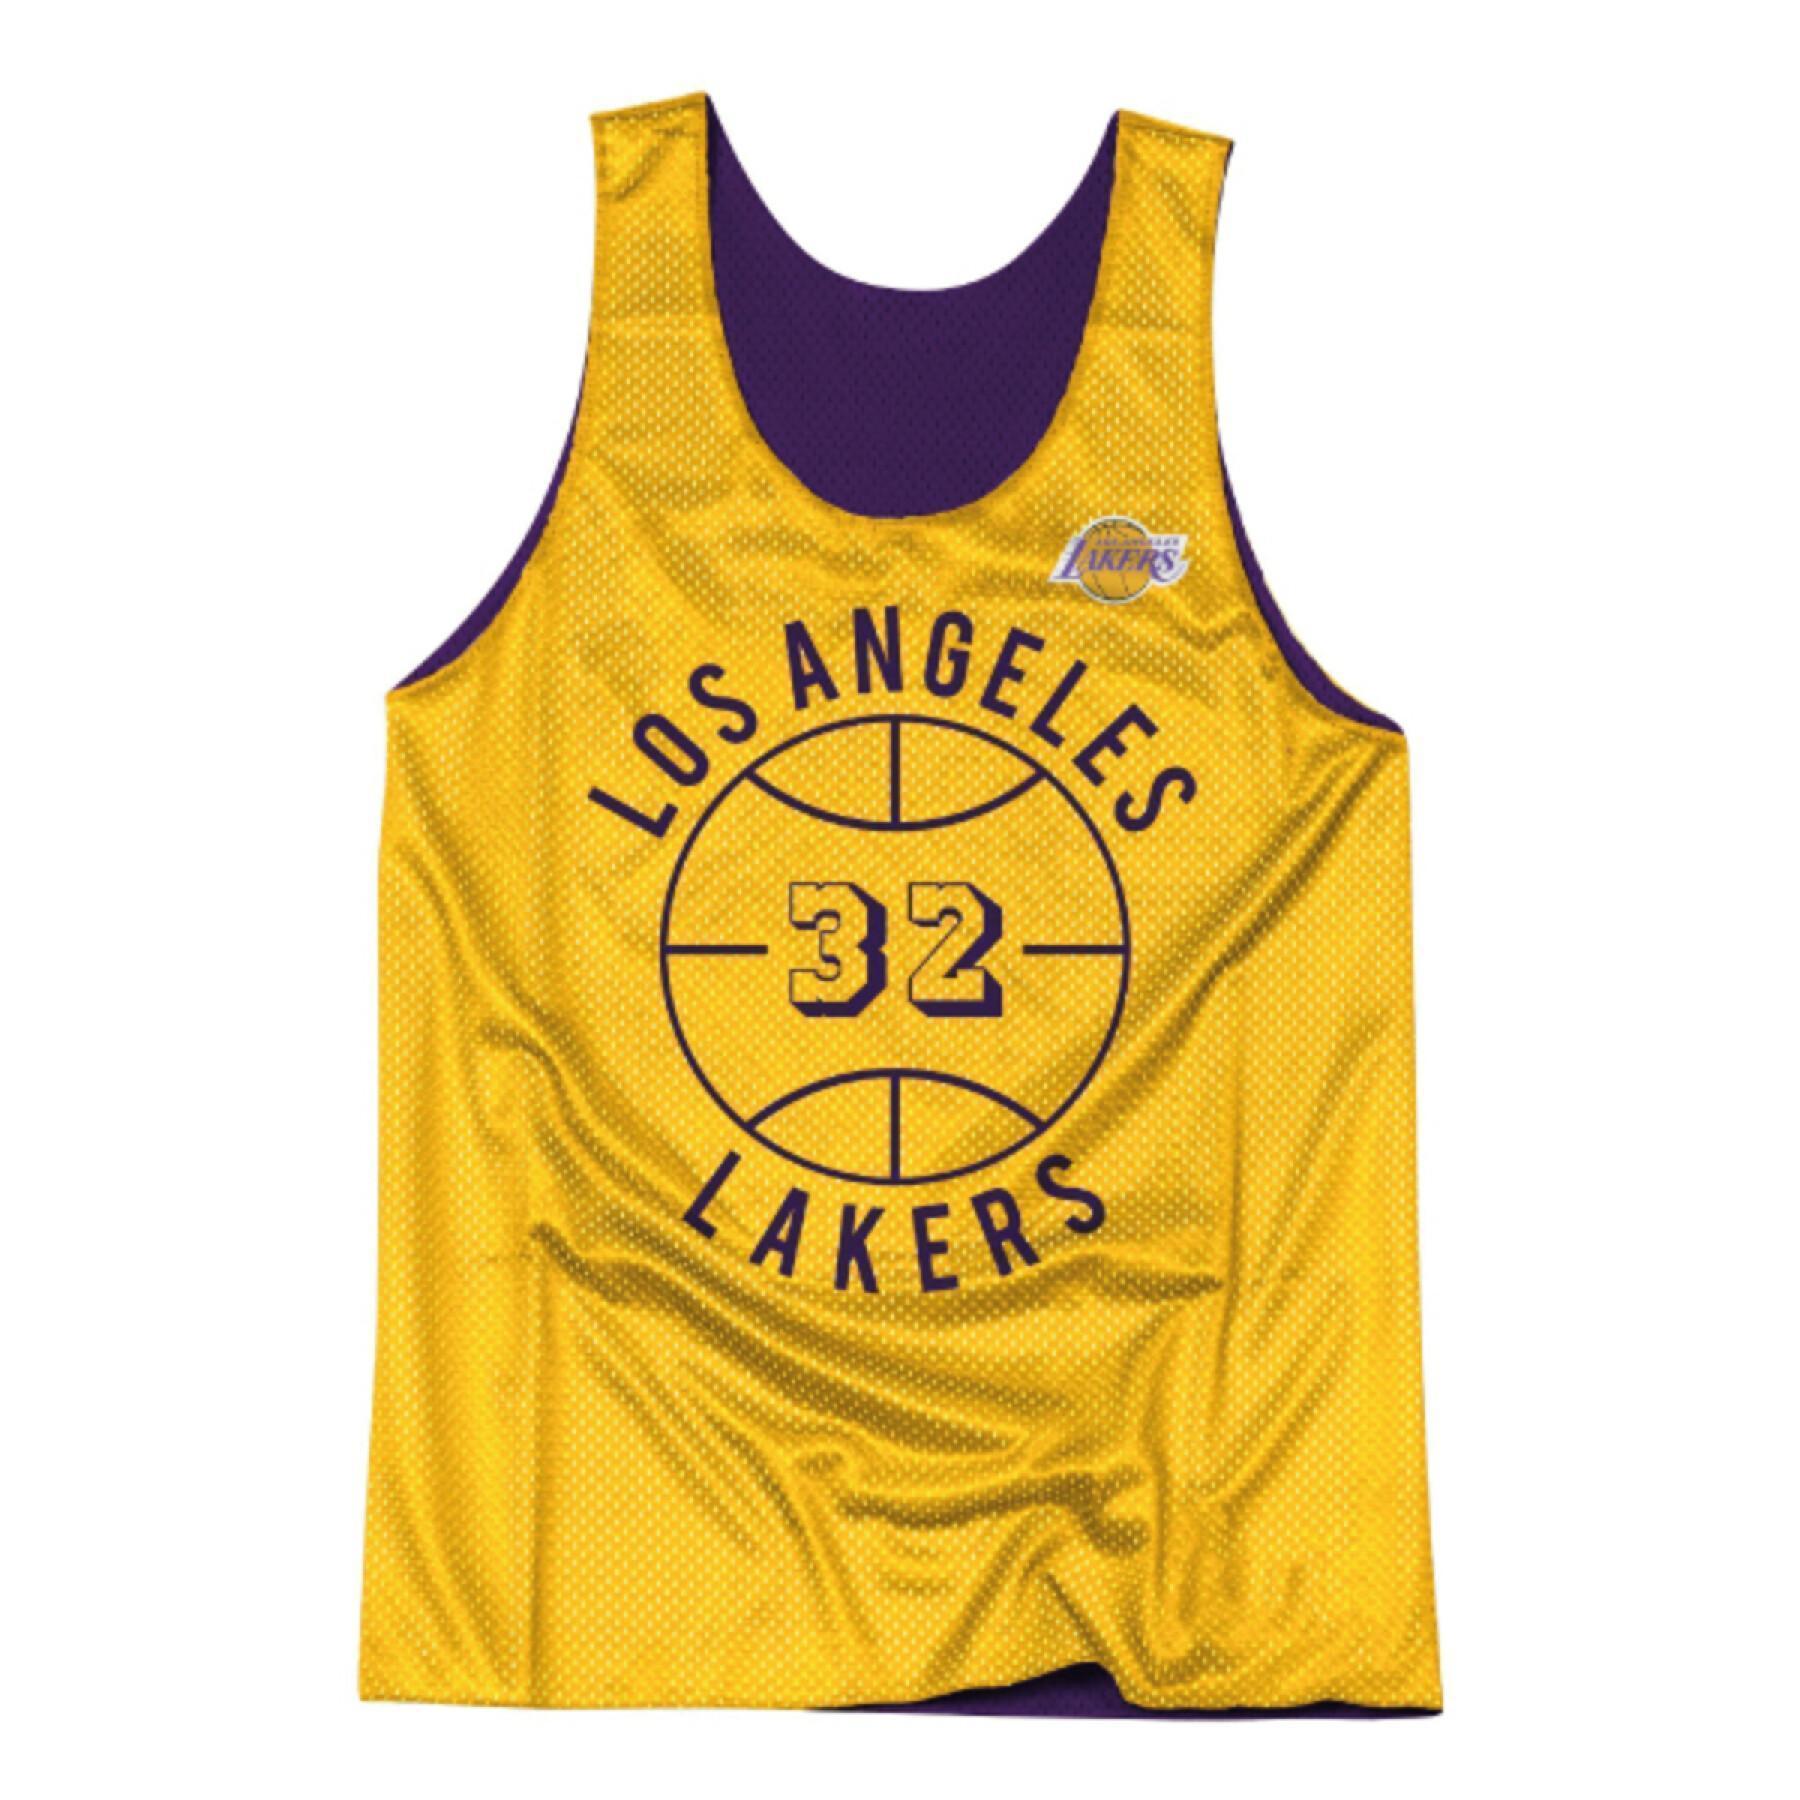 Reversible jersey Los Angeles Lakers Magic Johnson